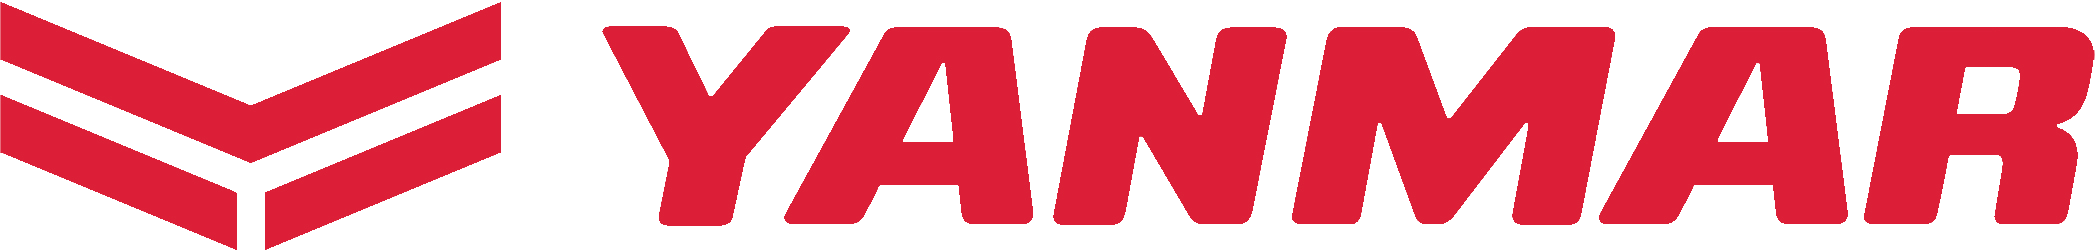 yanmar logo long